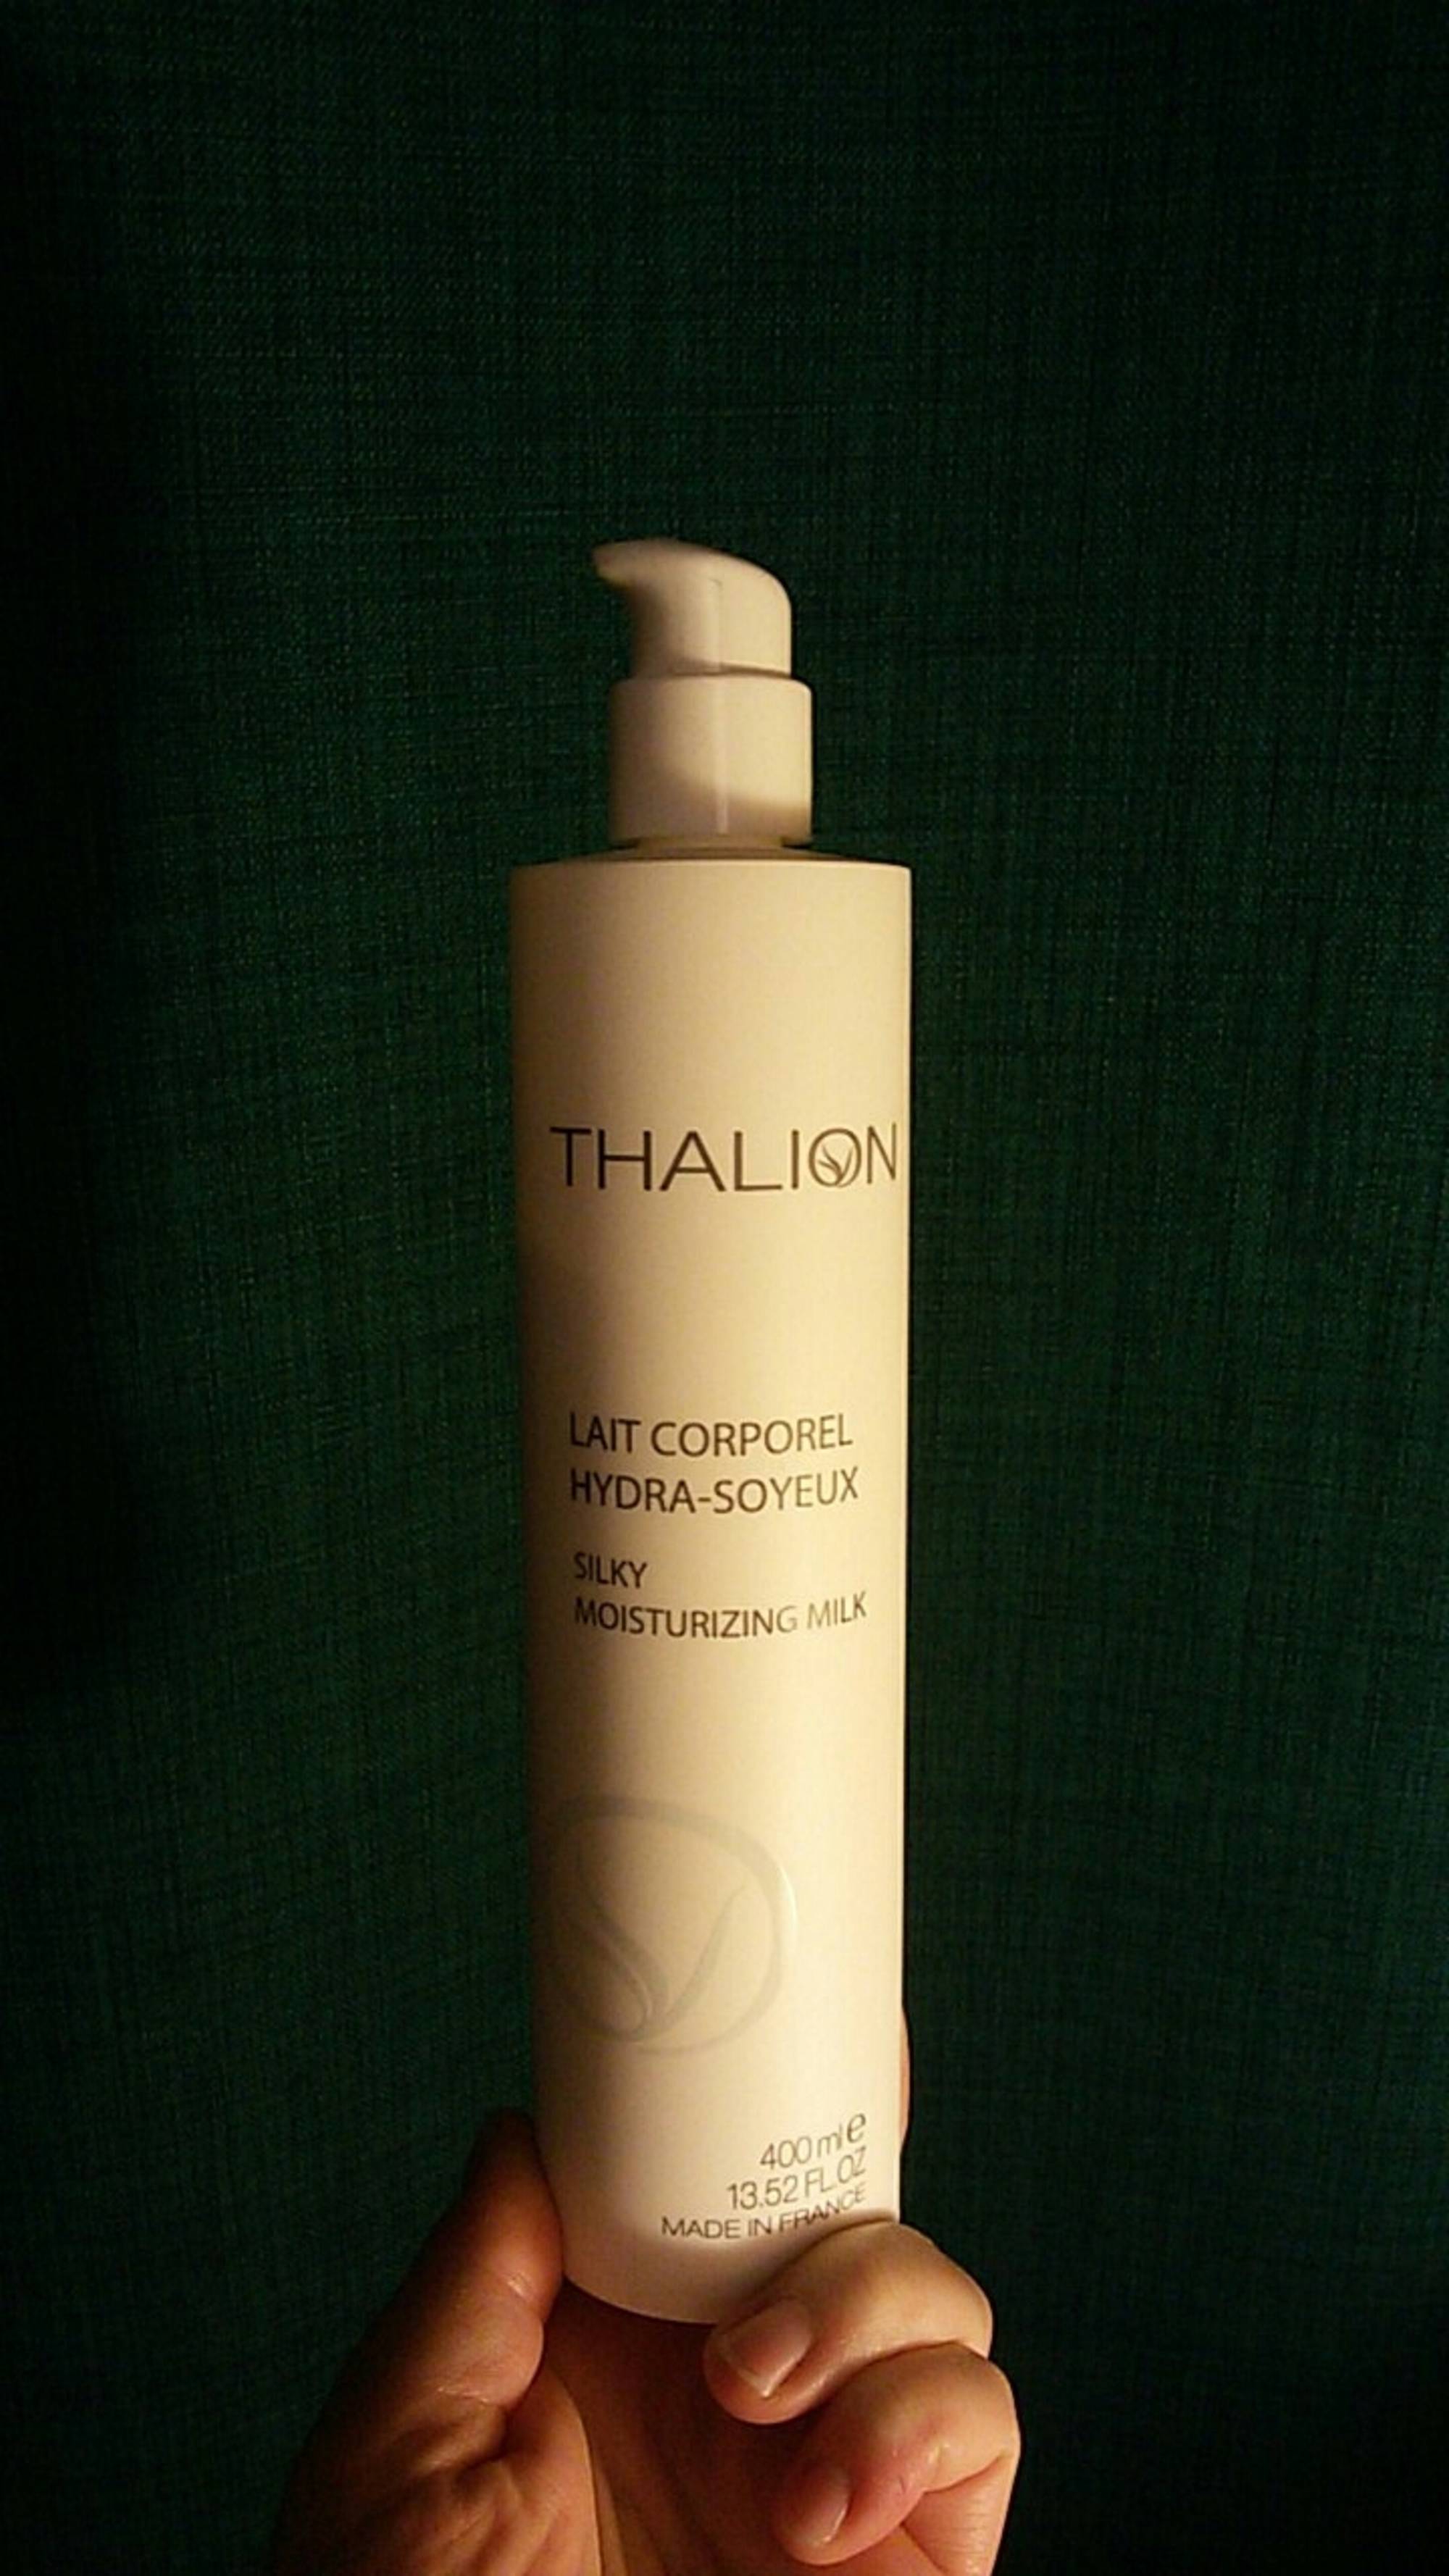 THALION - Lait corporel hydra-soyeux